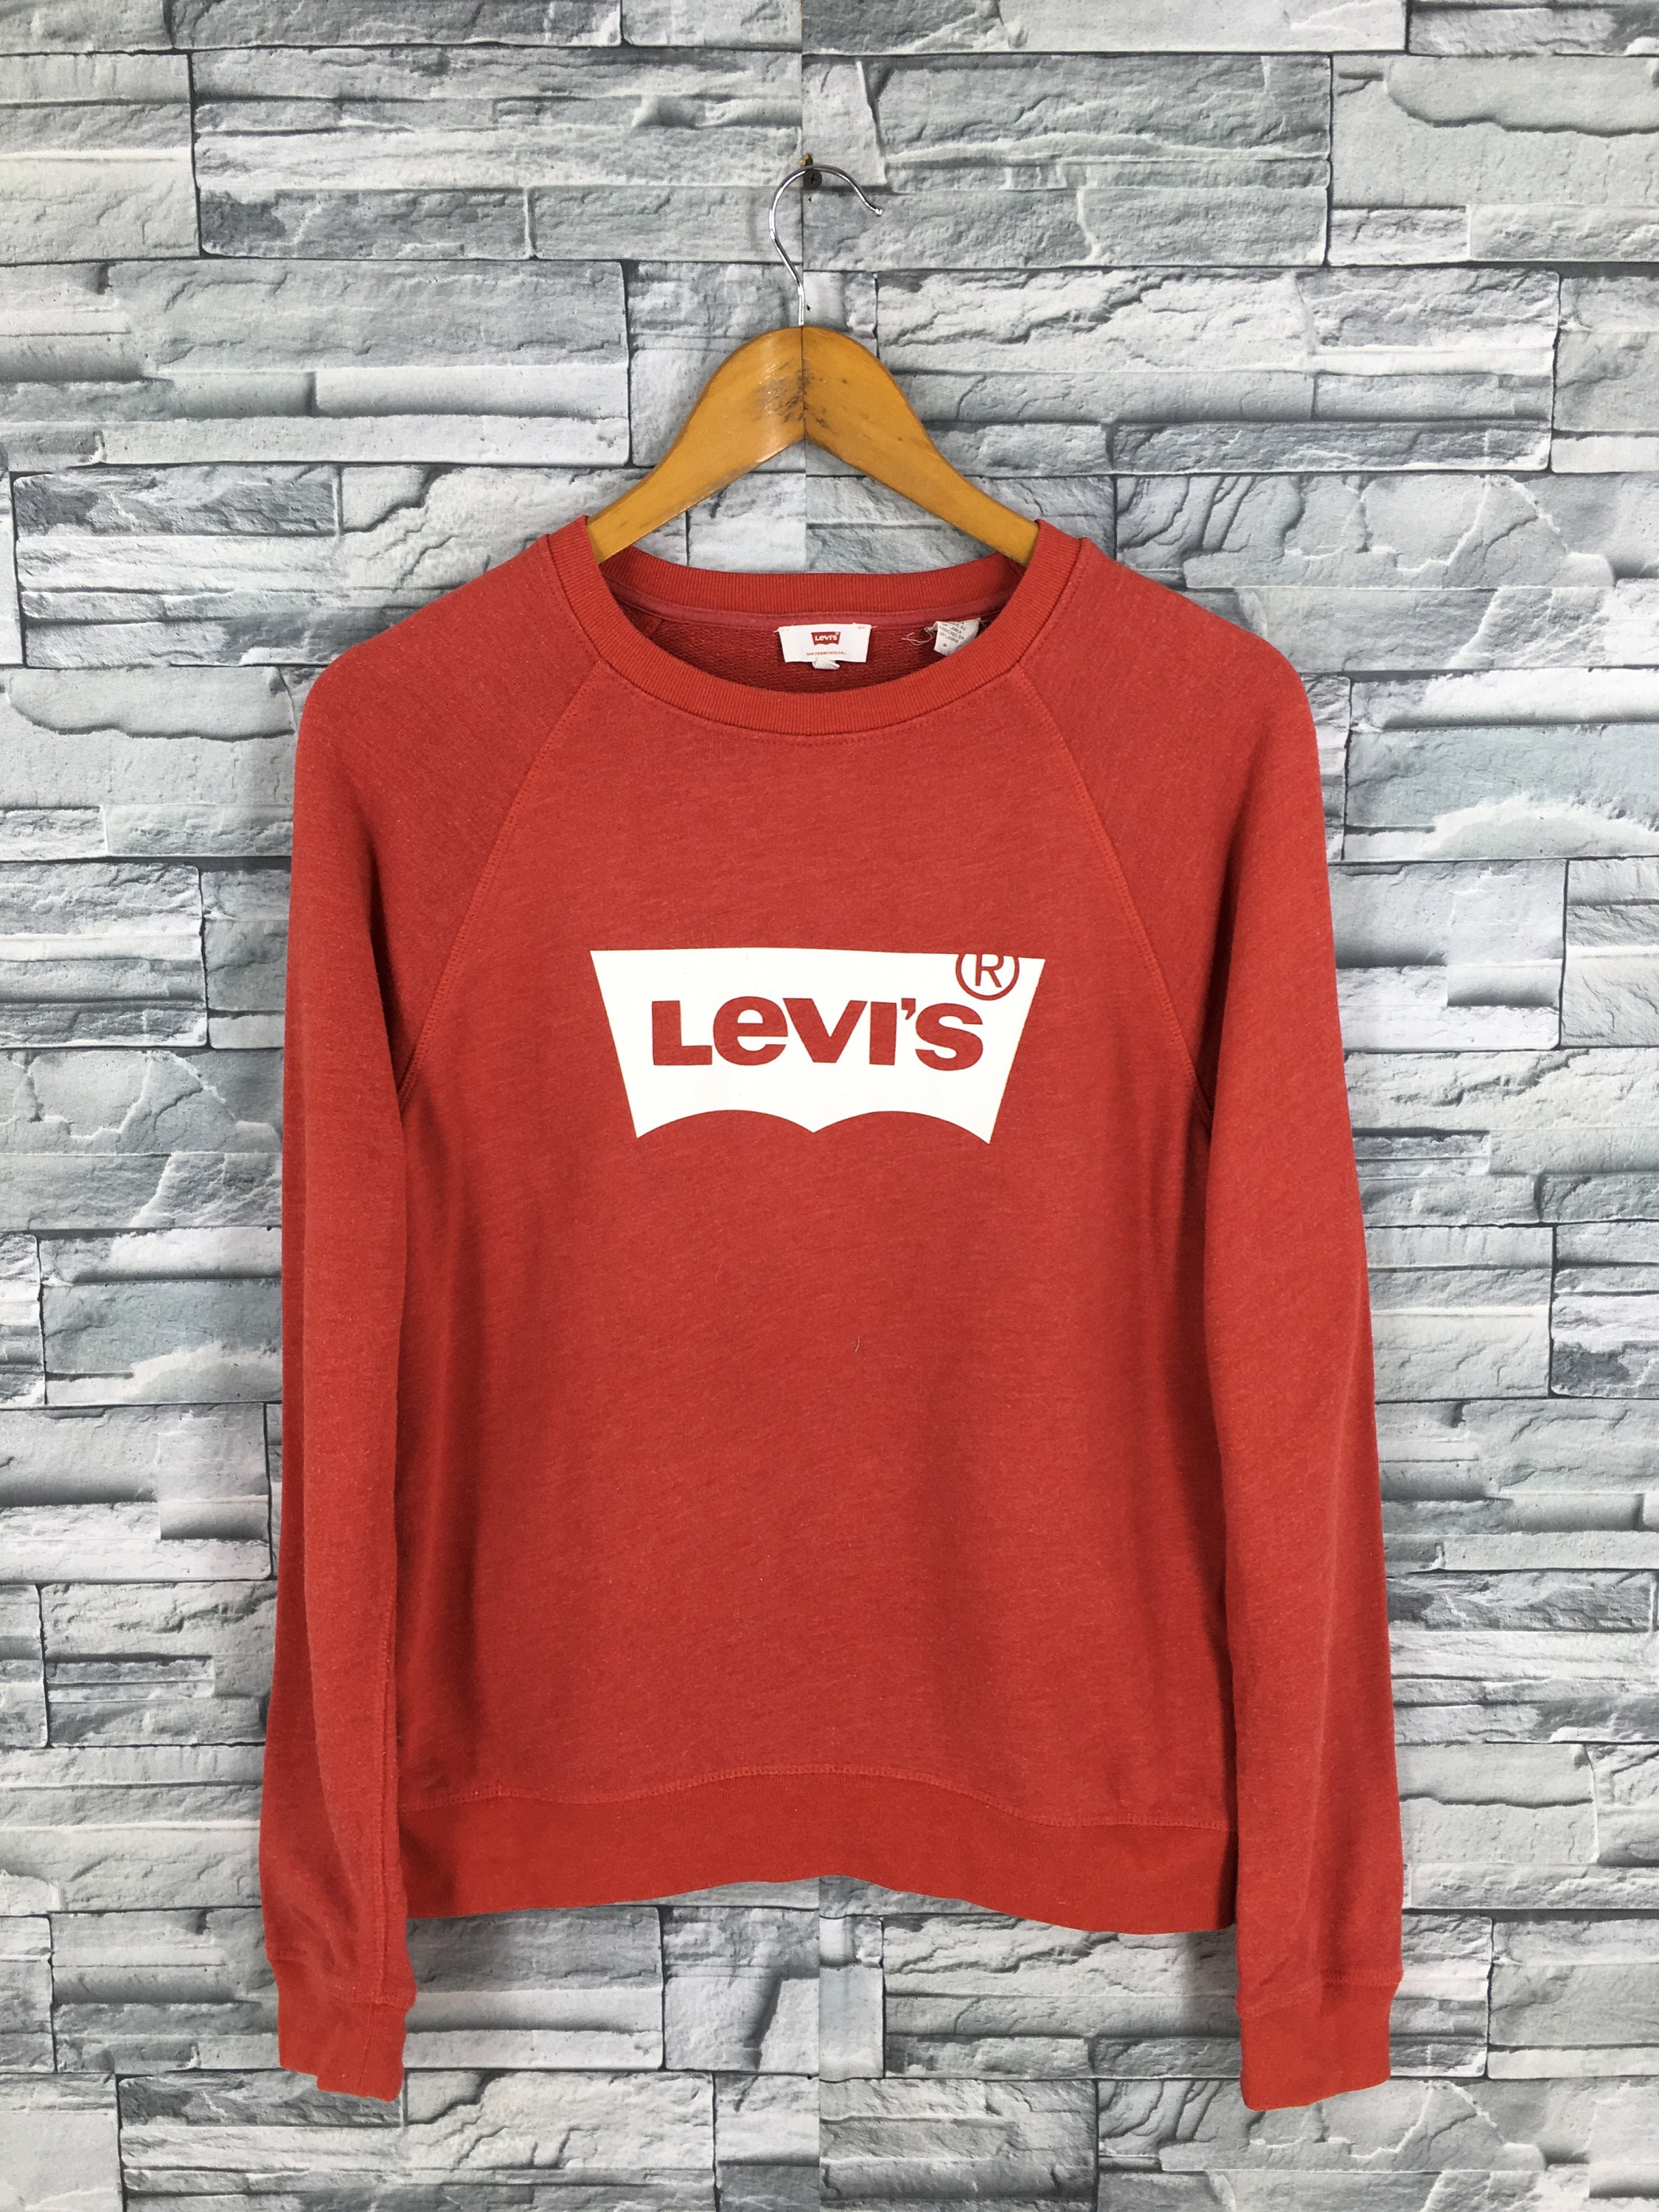 Vintage 1990's Levis Jeans Sweatshirt Medium Red - Etsy New Zealand